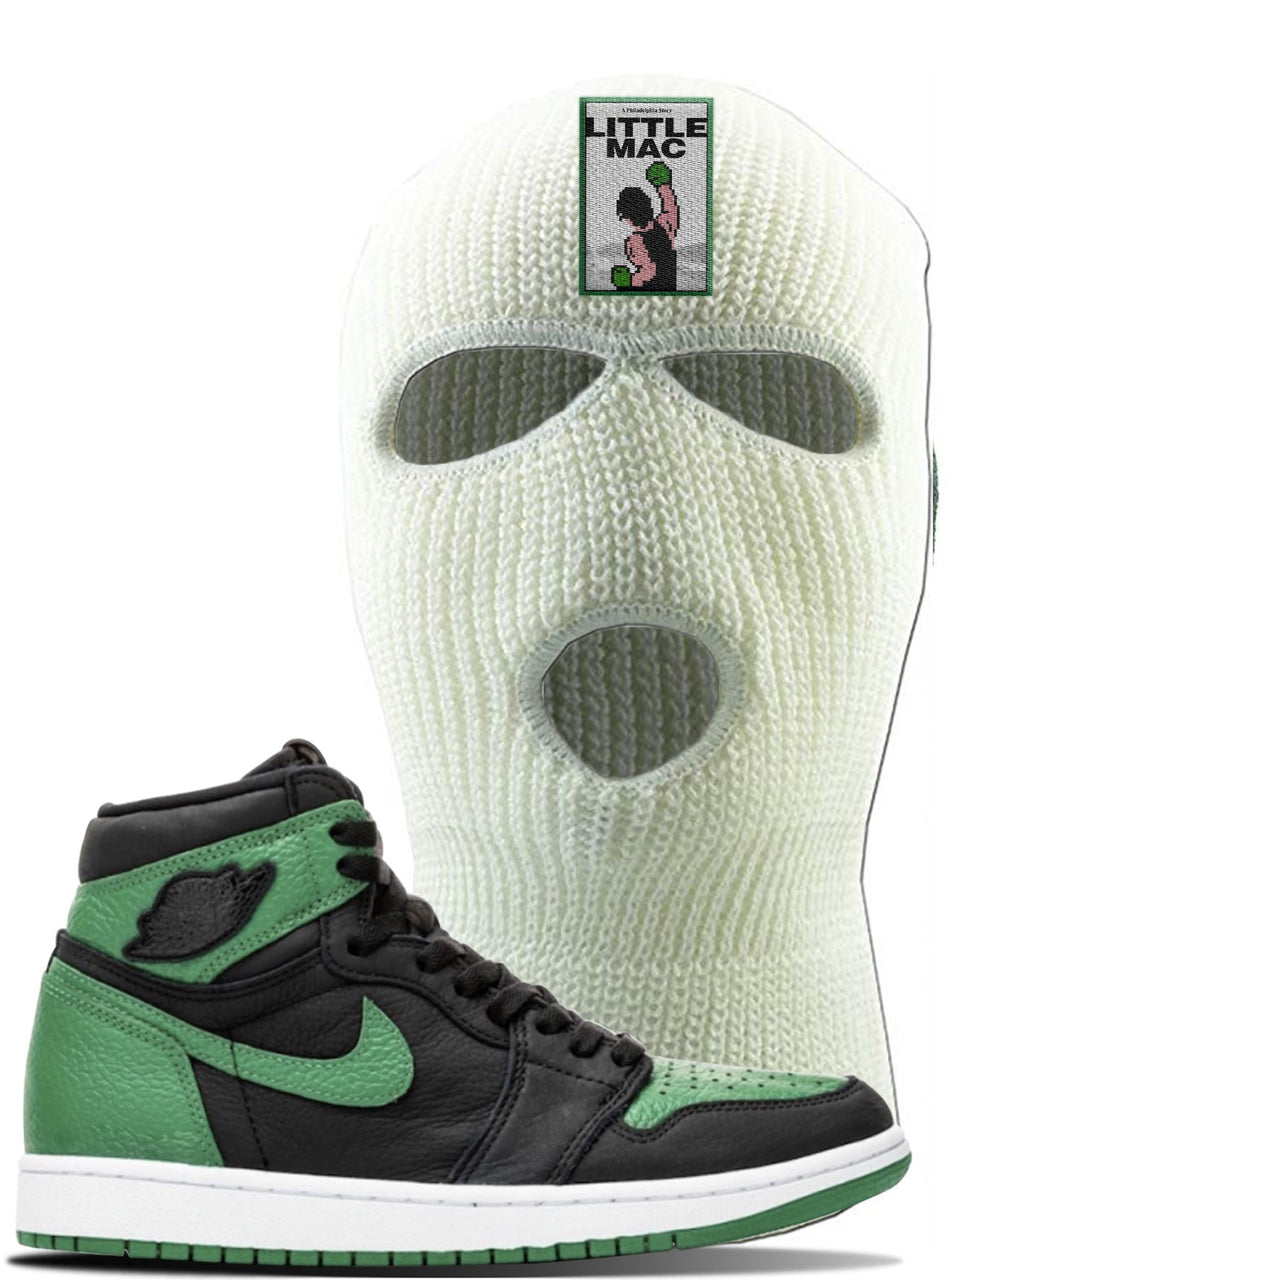 Jordan 1 Retro High OG Pine Green Gym Sneaker White Ski Mask | Hat to match Air Jordan 1 Retro High OG Pine Green Gym Shoes | Little Mac A Philly Story